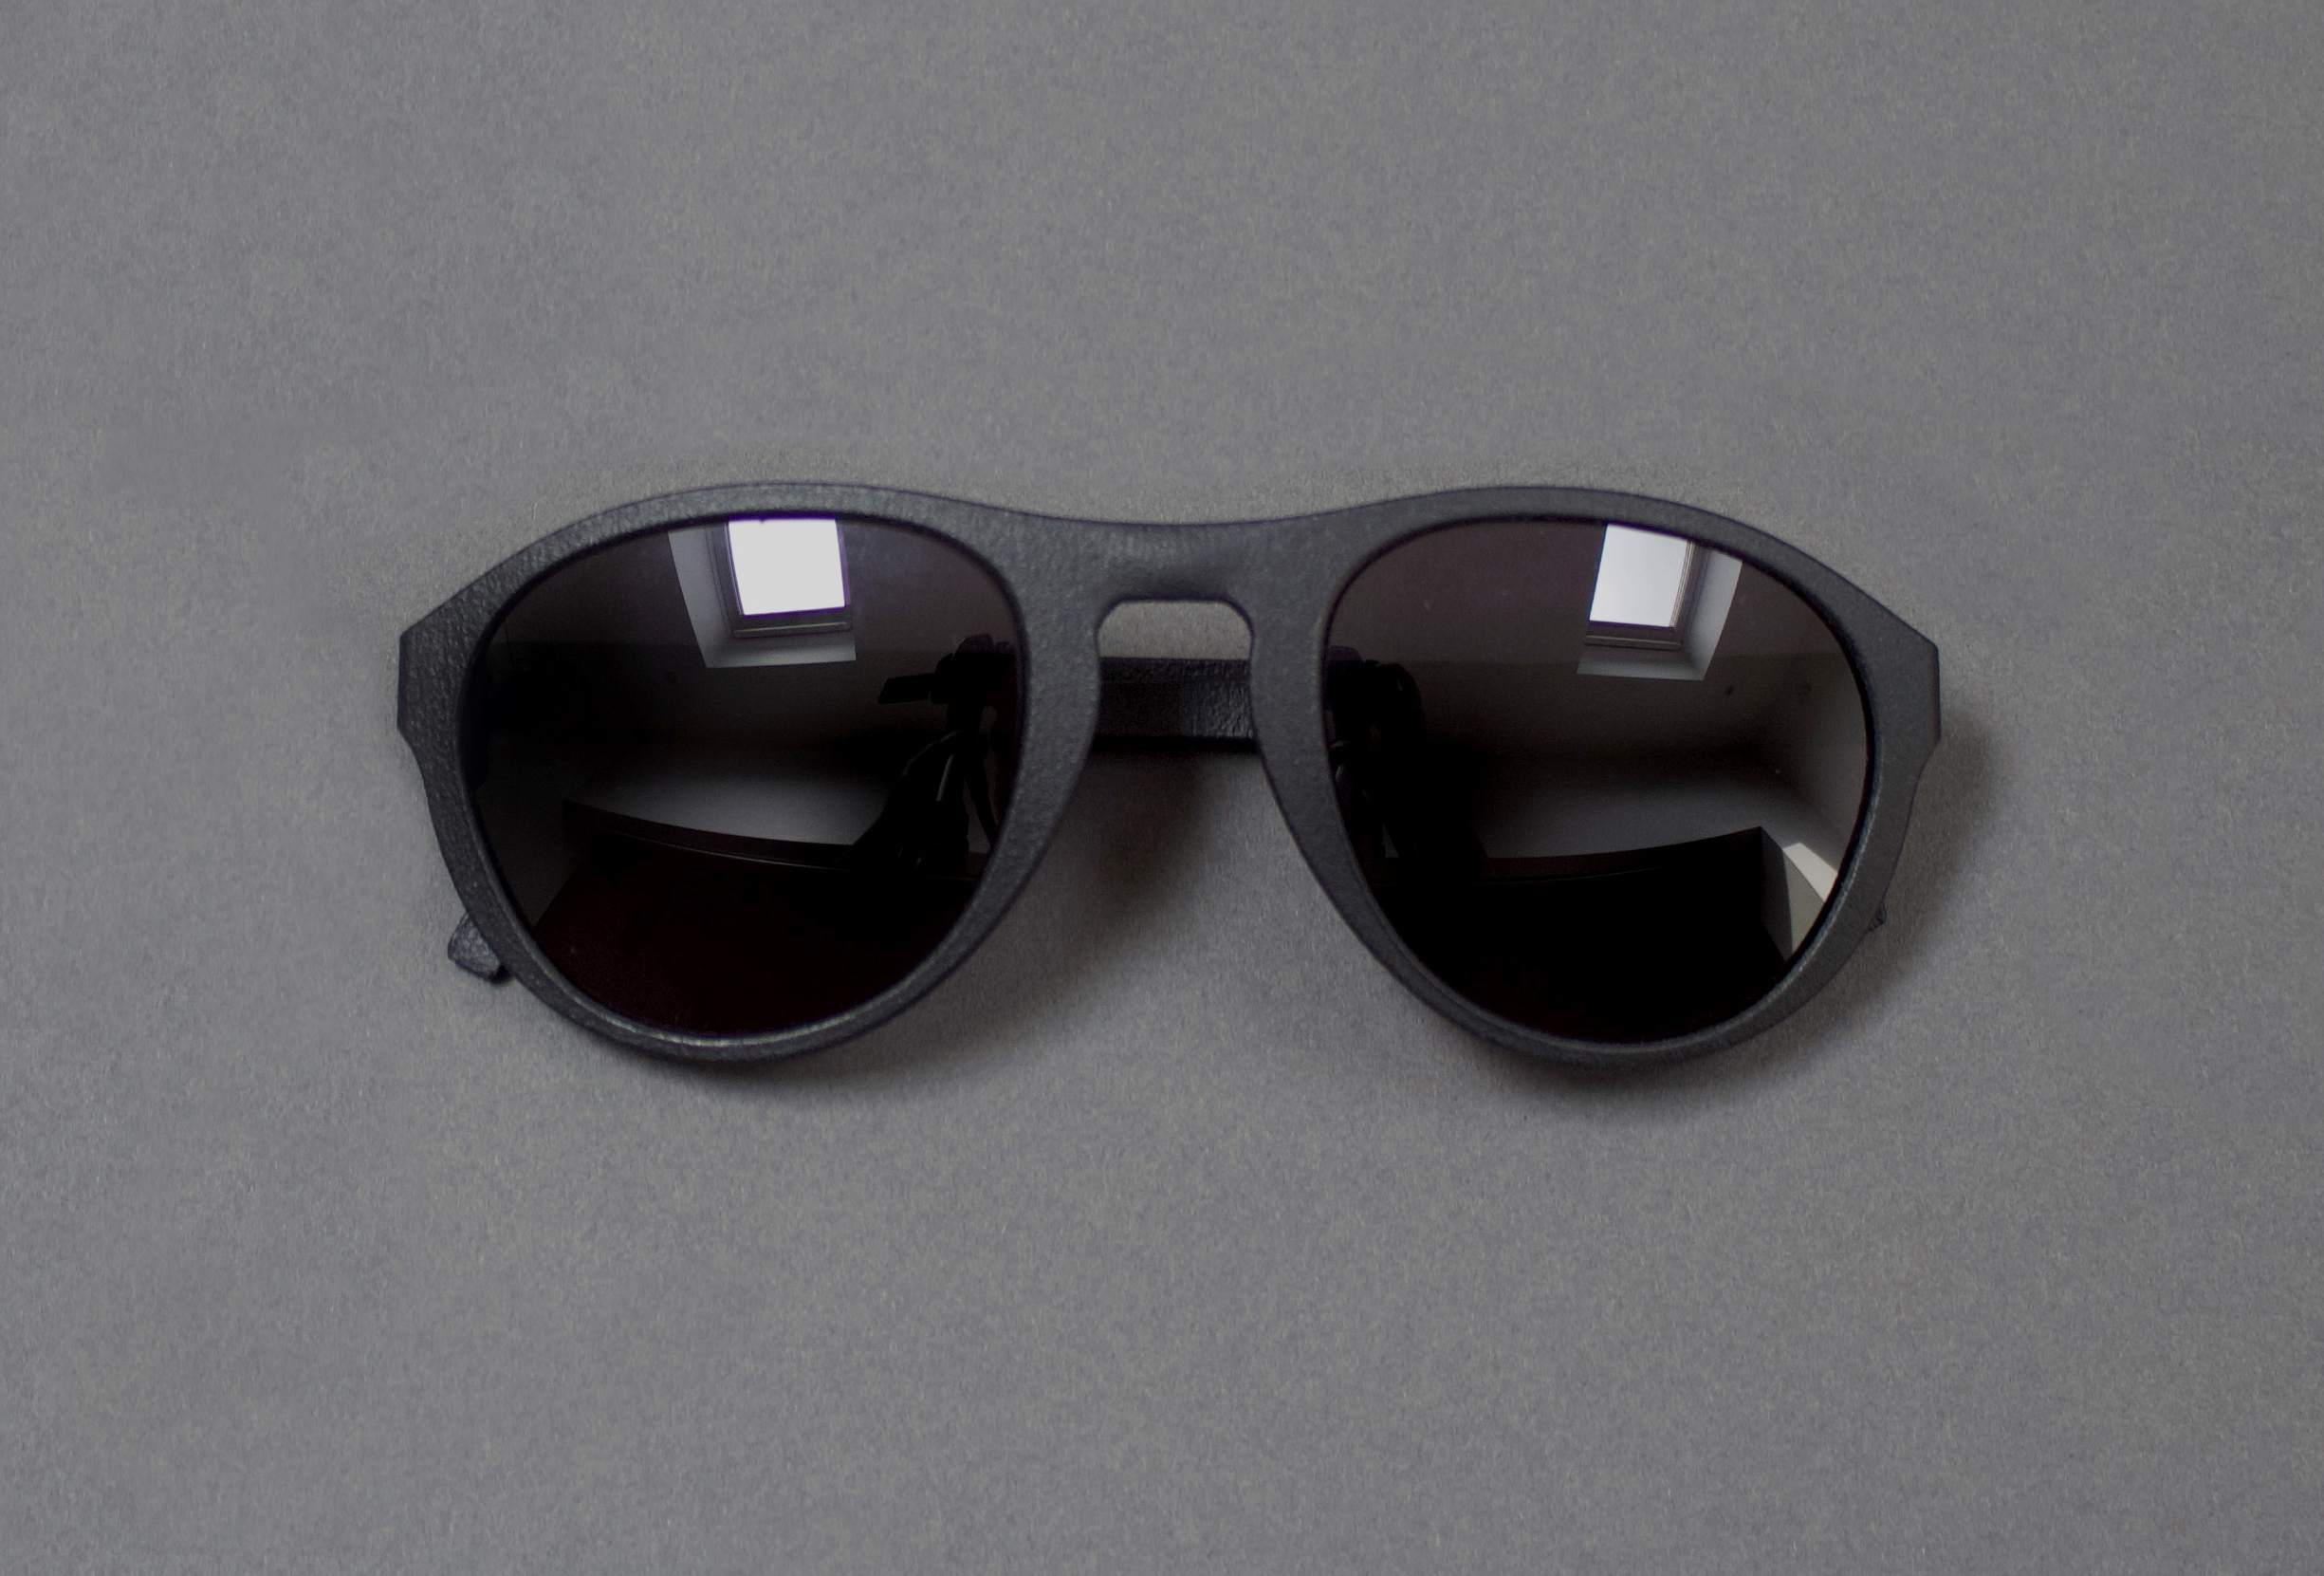 Sunglasses from the Kirwin Life Tools Range